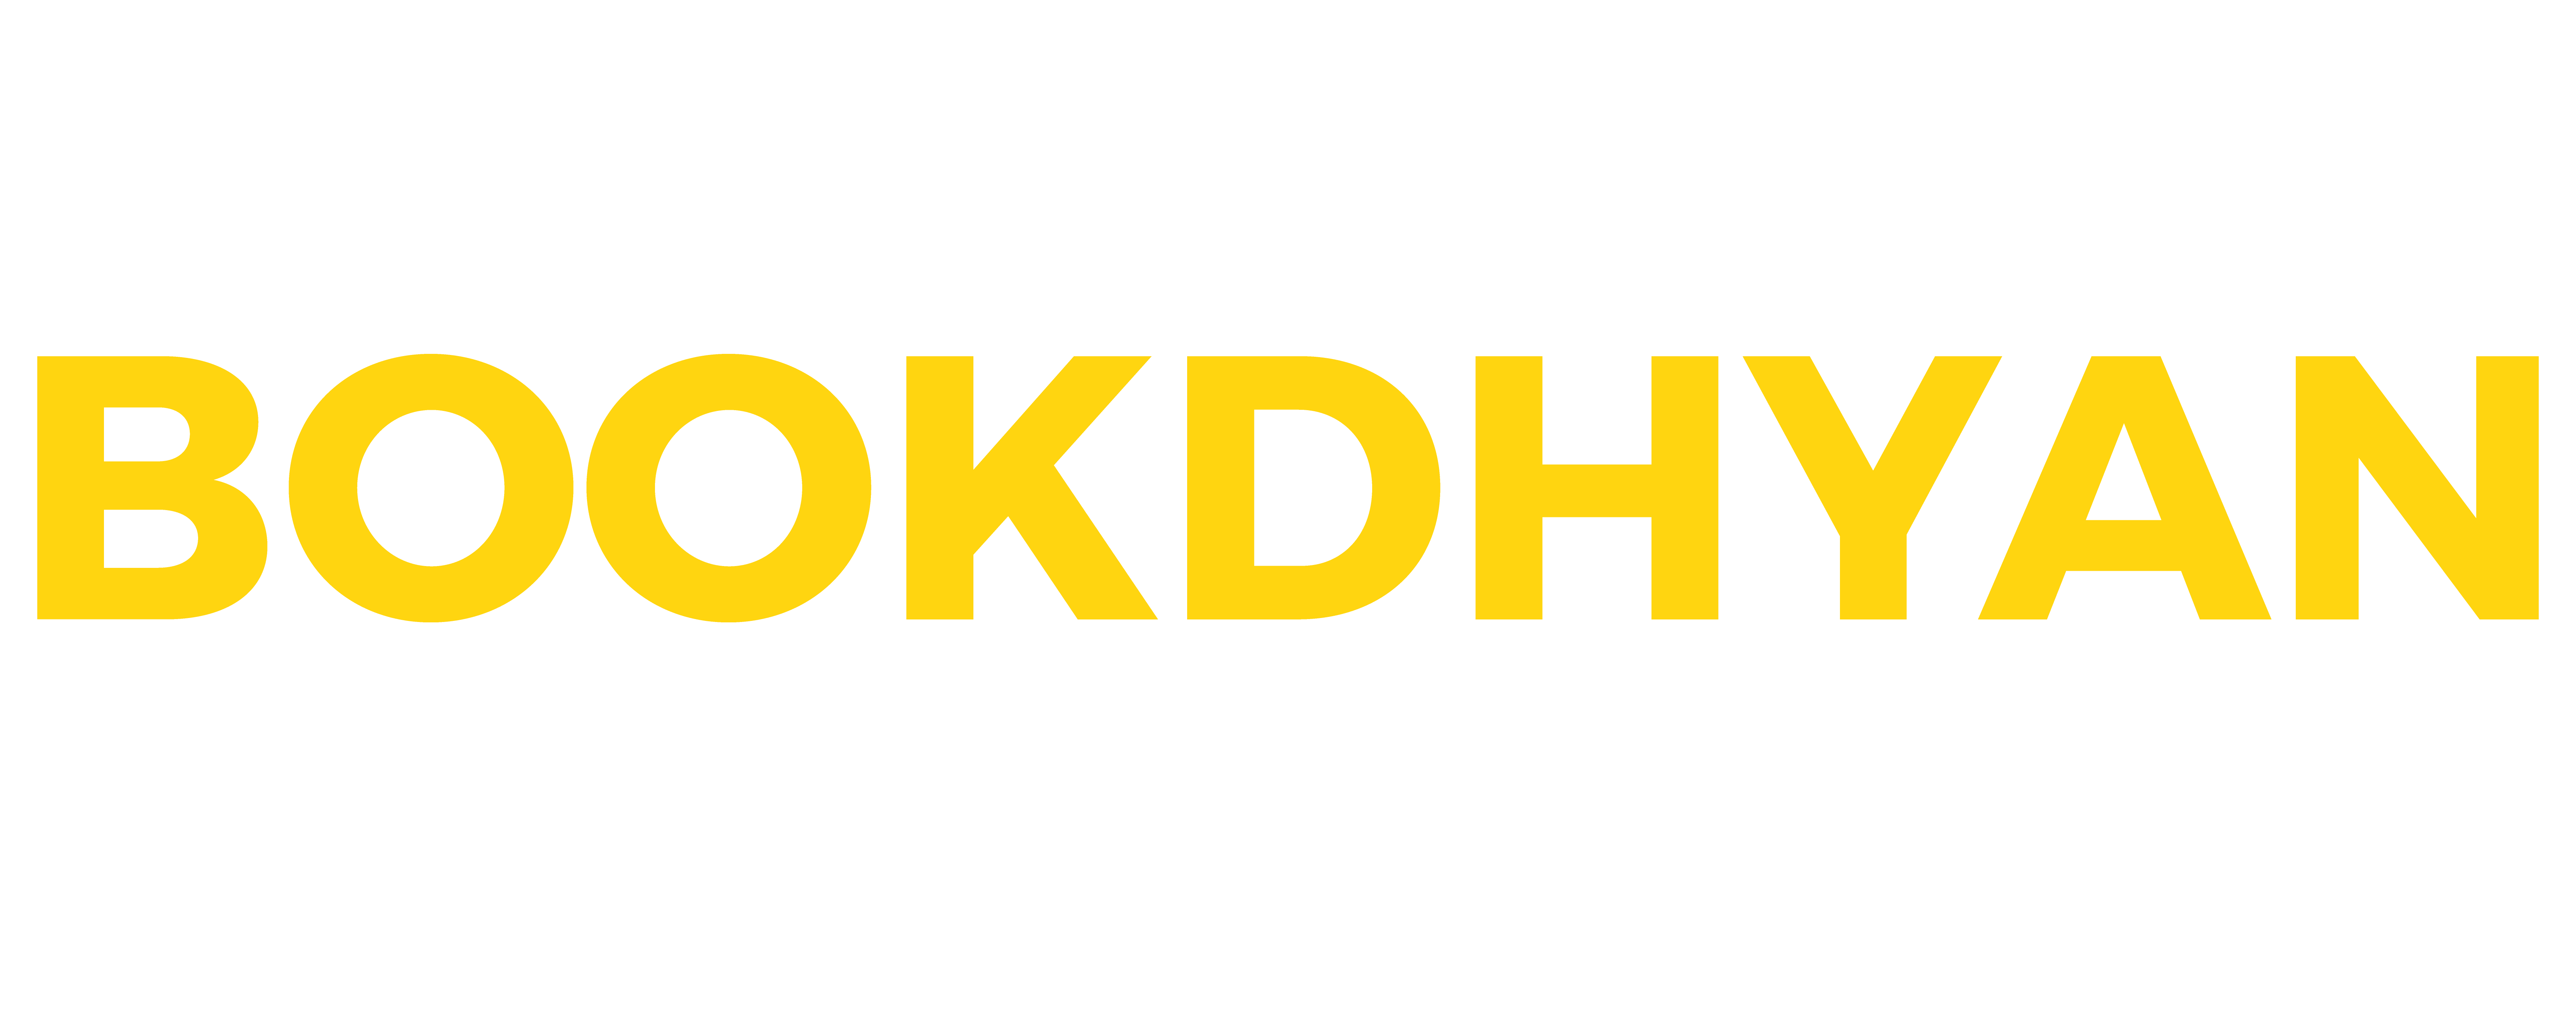 Bookdhyan